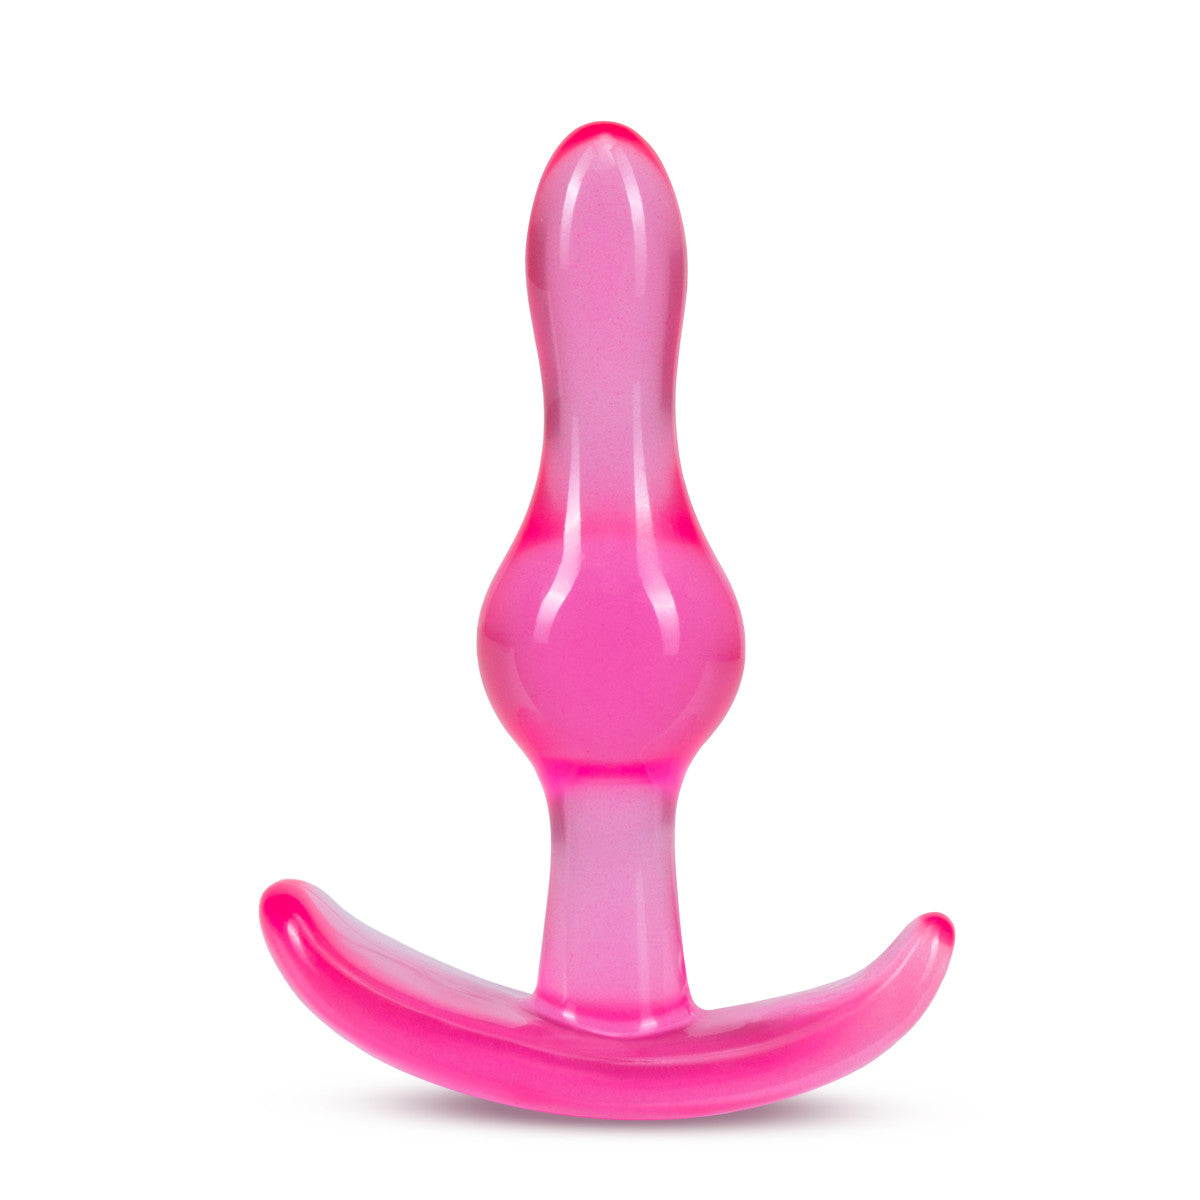 Blush B Yours Curvy Pink 3.5-Inch Anal Plug